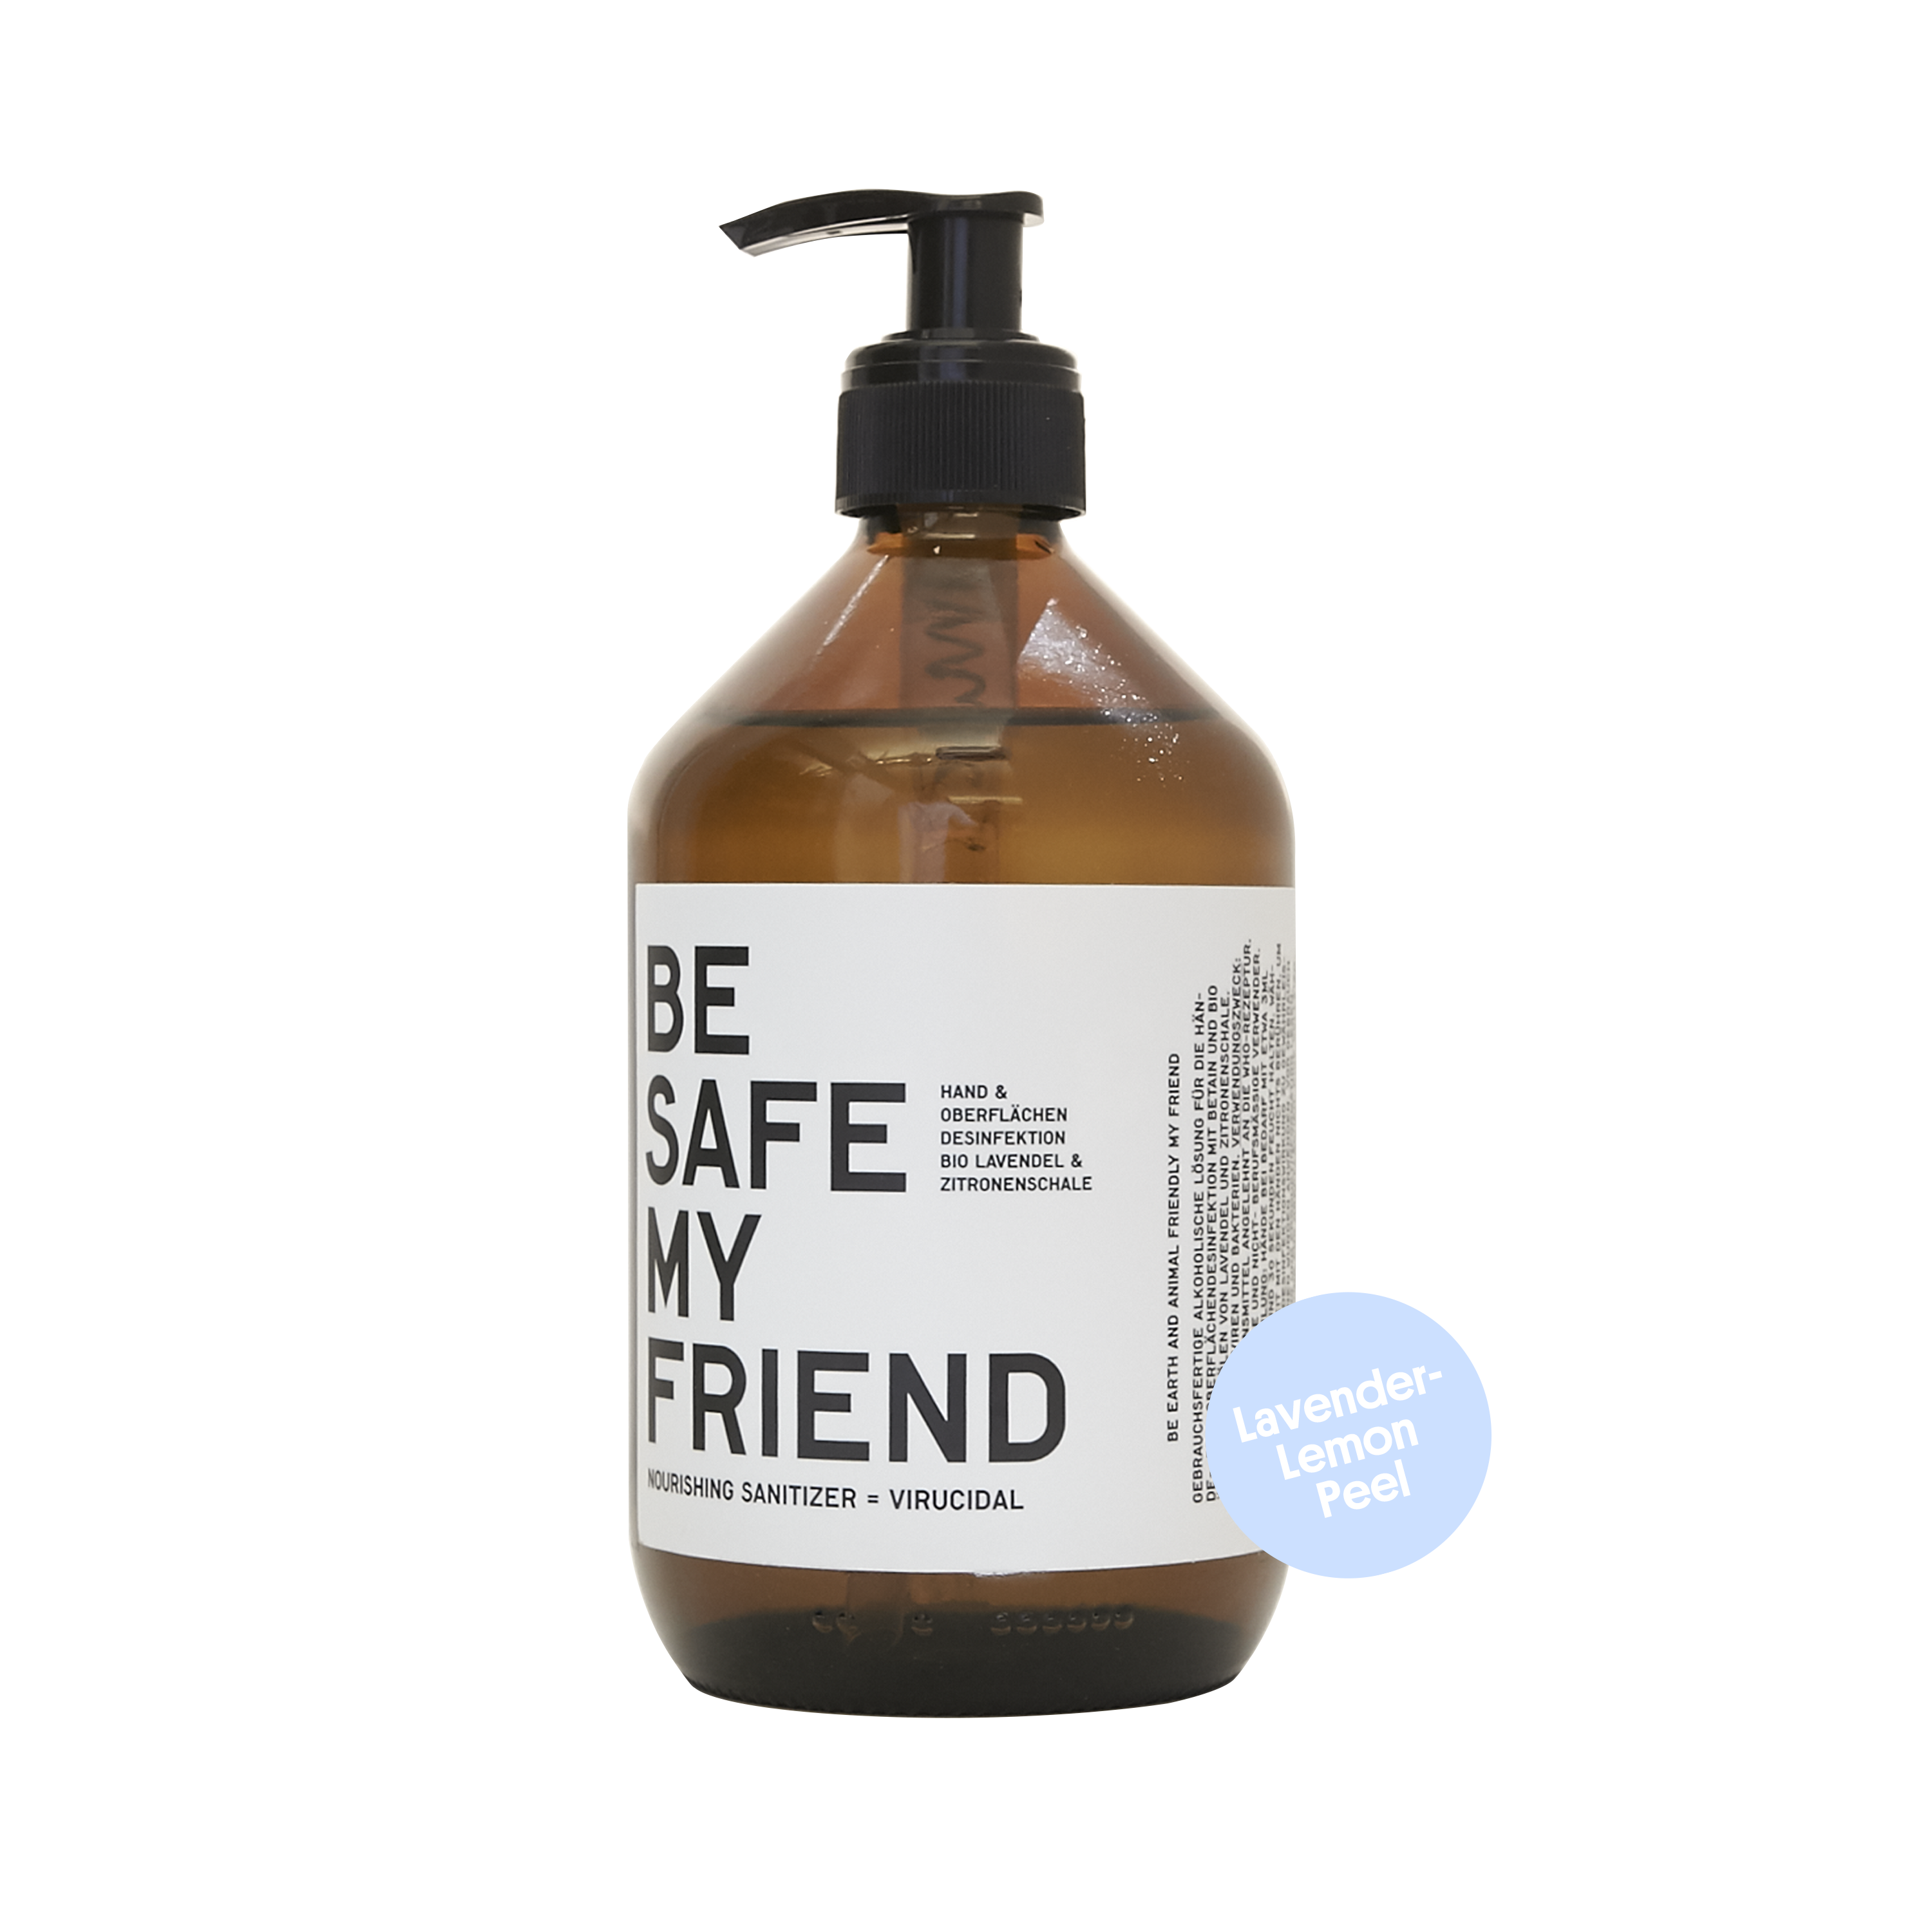  Organic Lavender & Lemon Peel 5 Liter Refill Sanitizer - BE [...] MY FRIEND